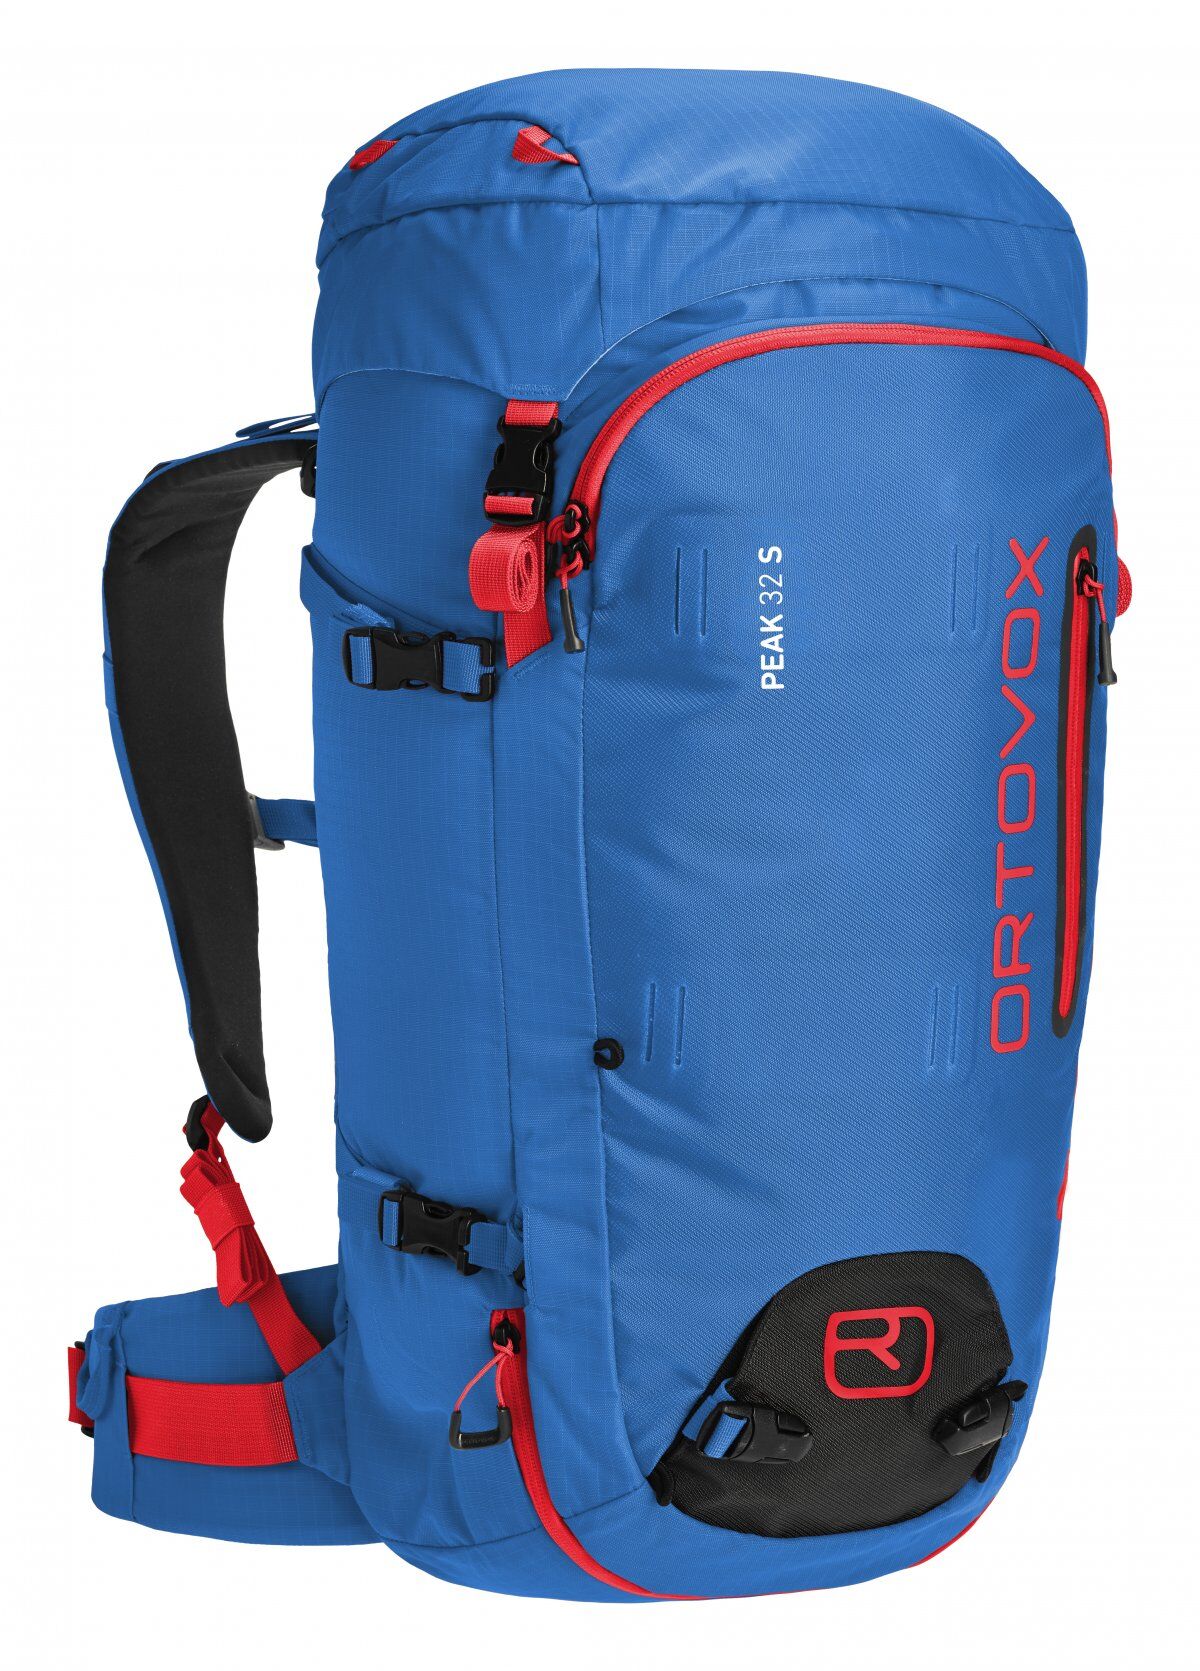 Ortovox - Peak 32 S - Touring backpack - Women's